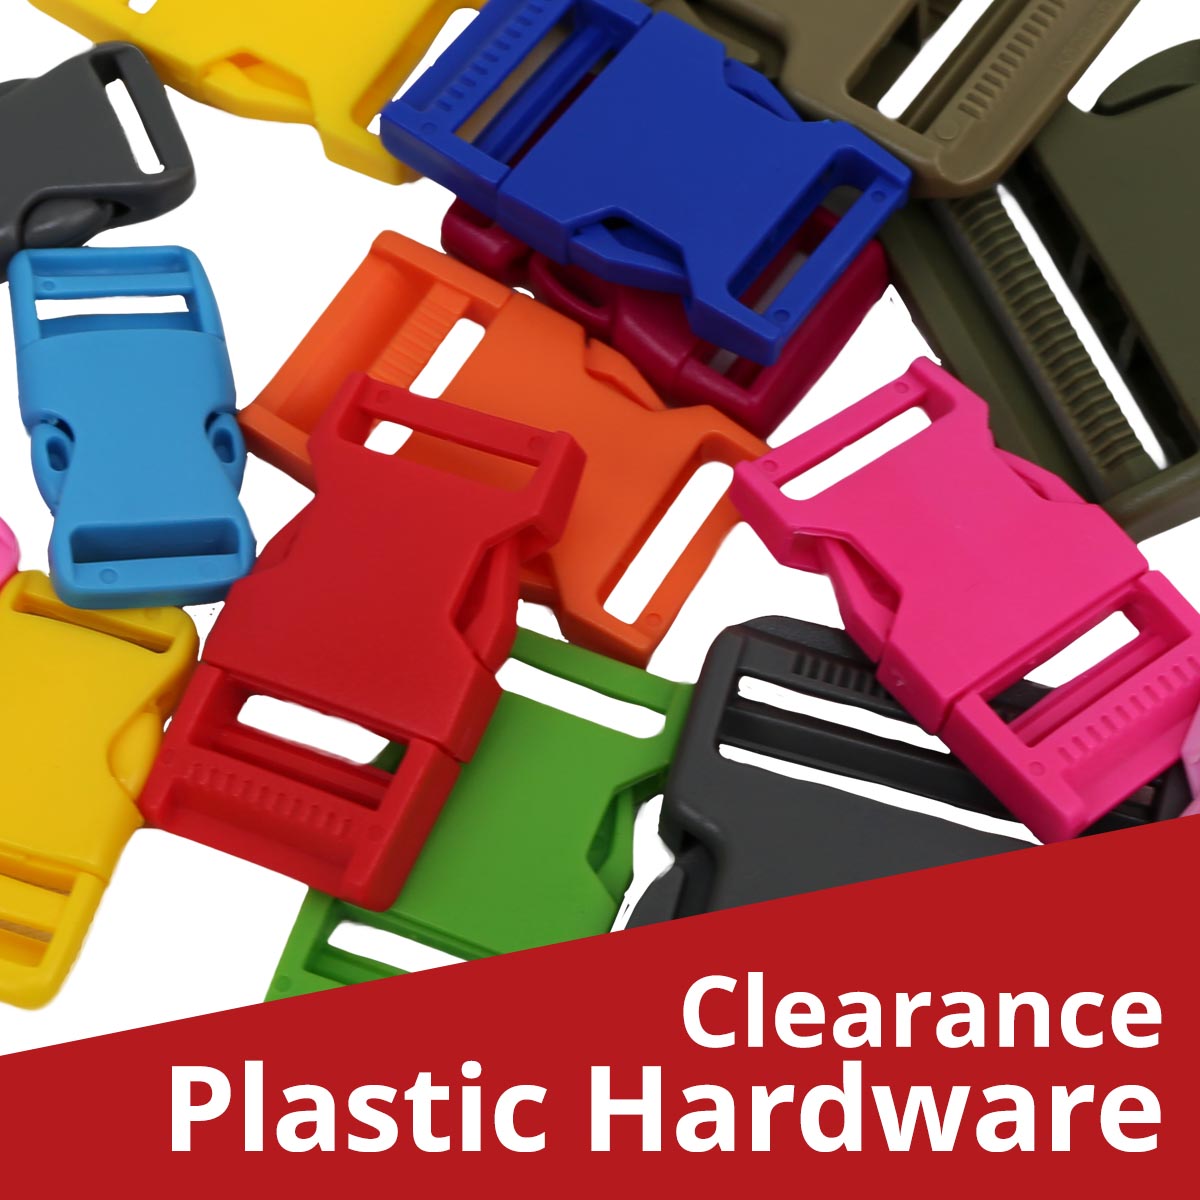 Clearance Plastic Hardware